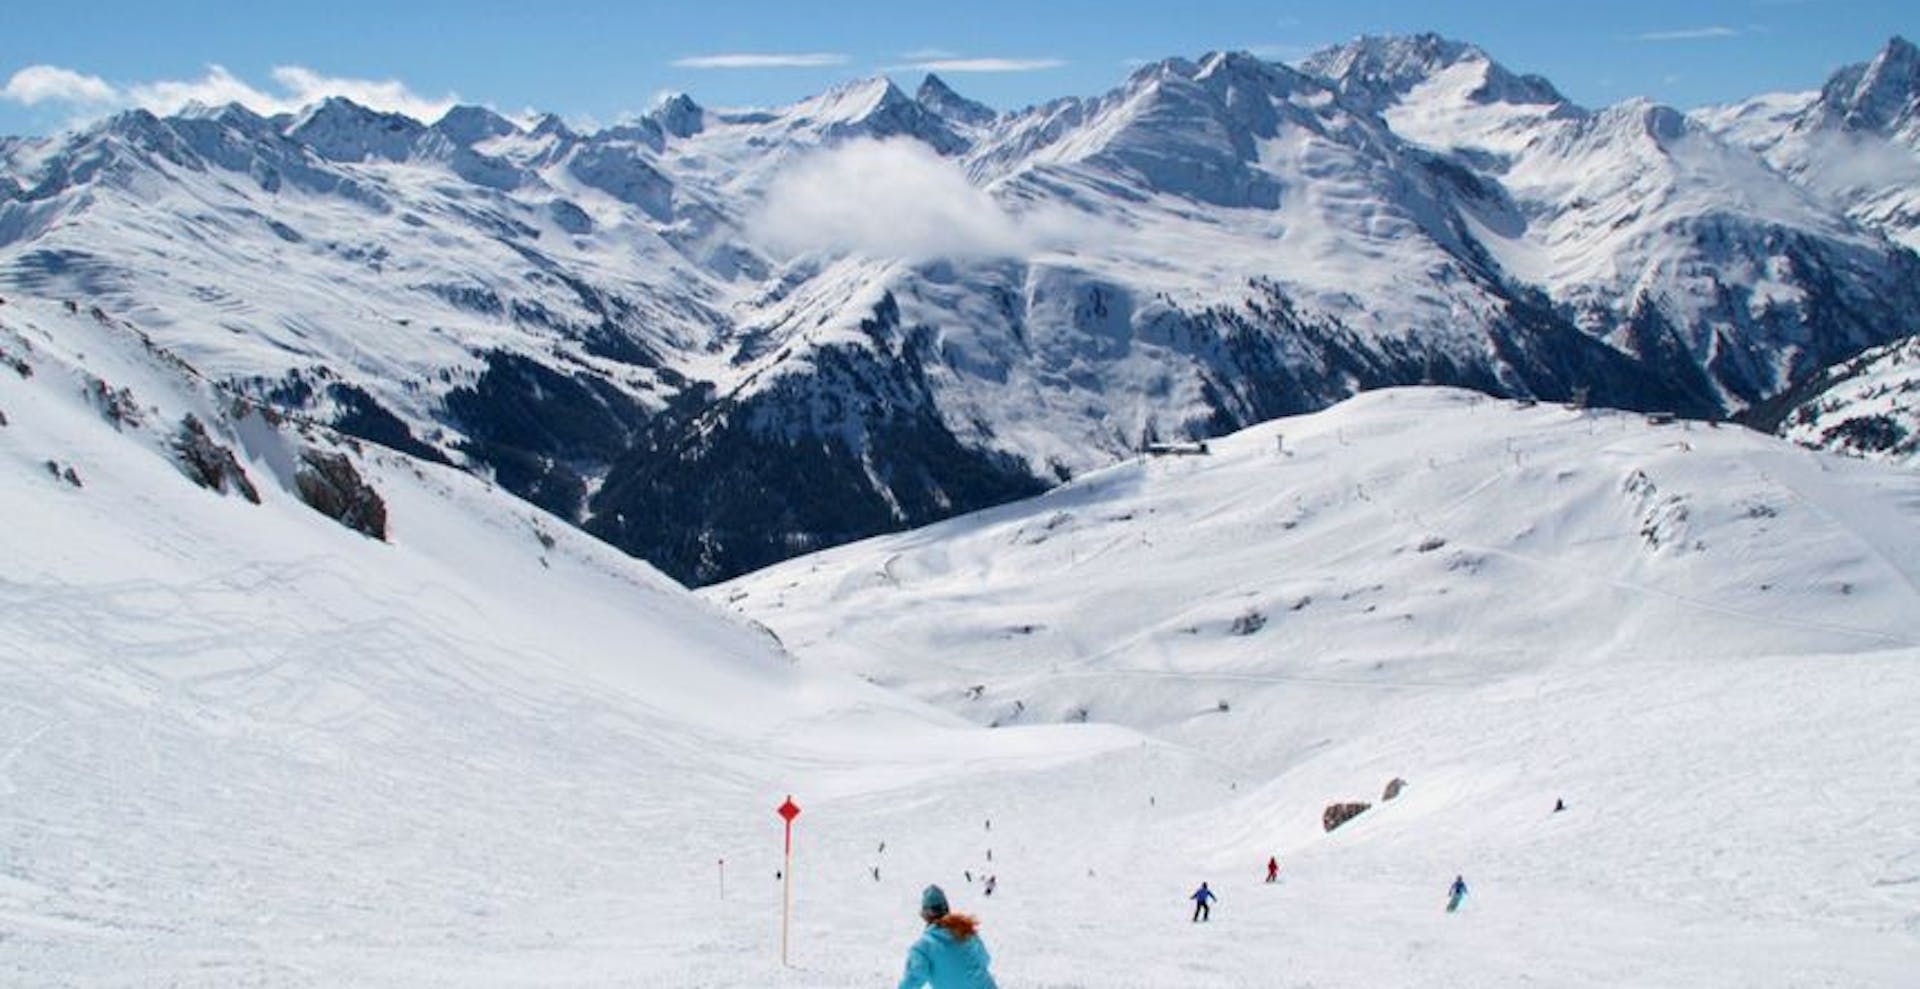 Ski Arlberg is Austria's biggest lift-linked ski area